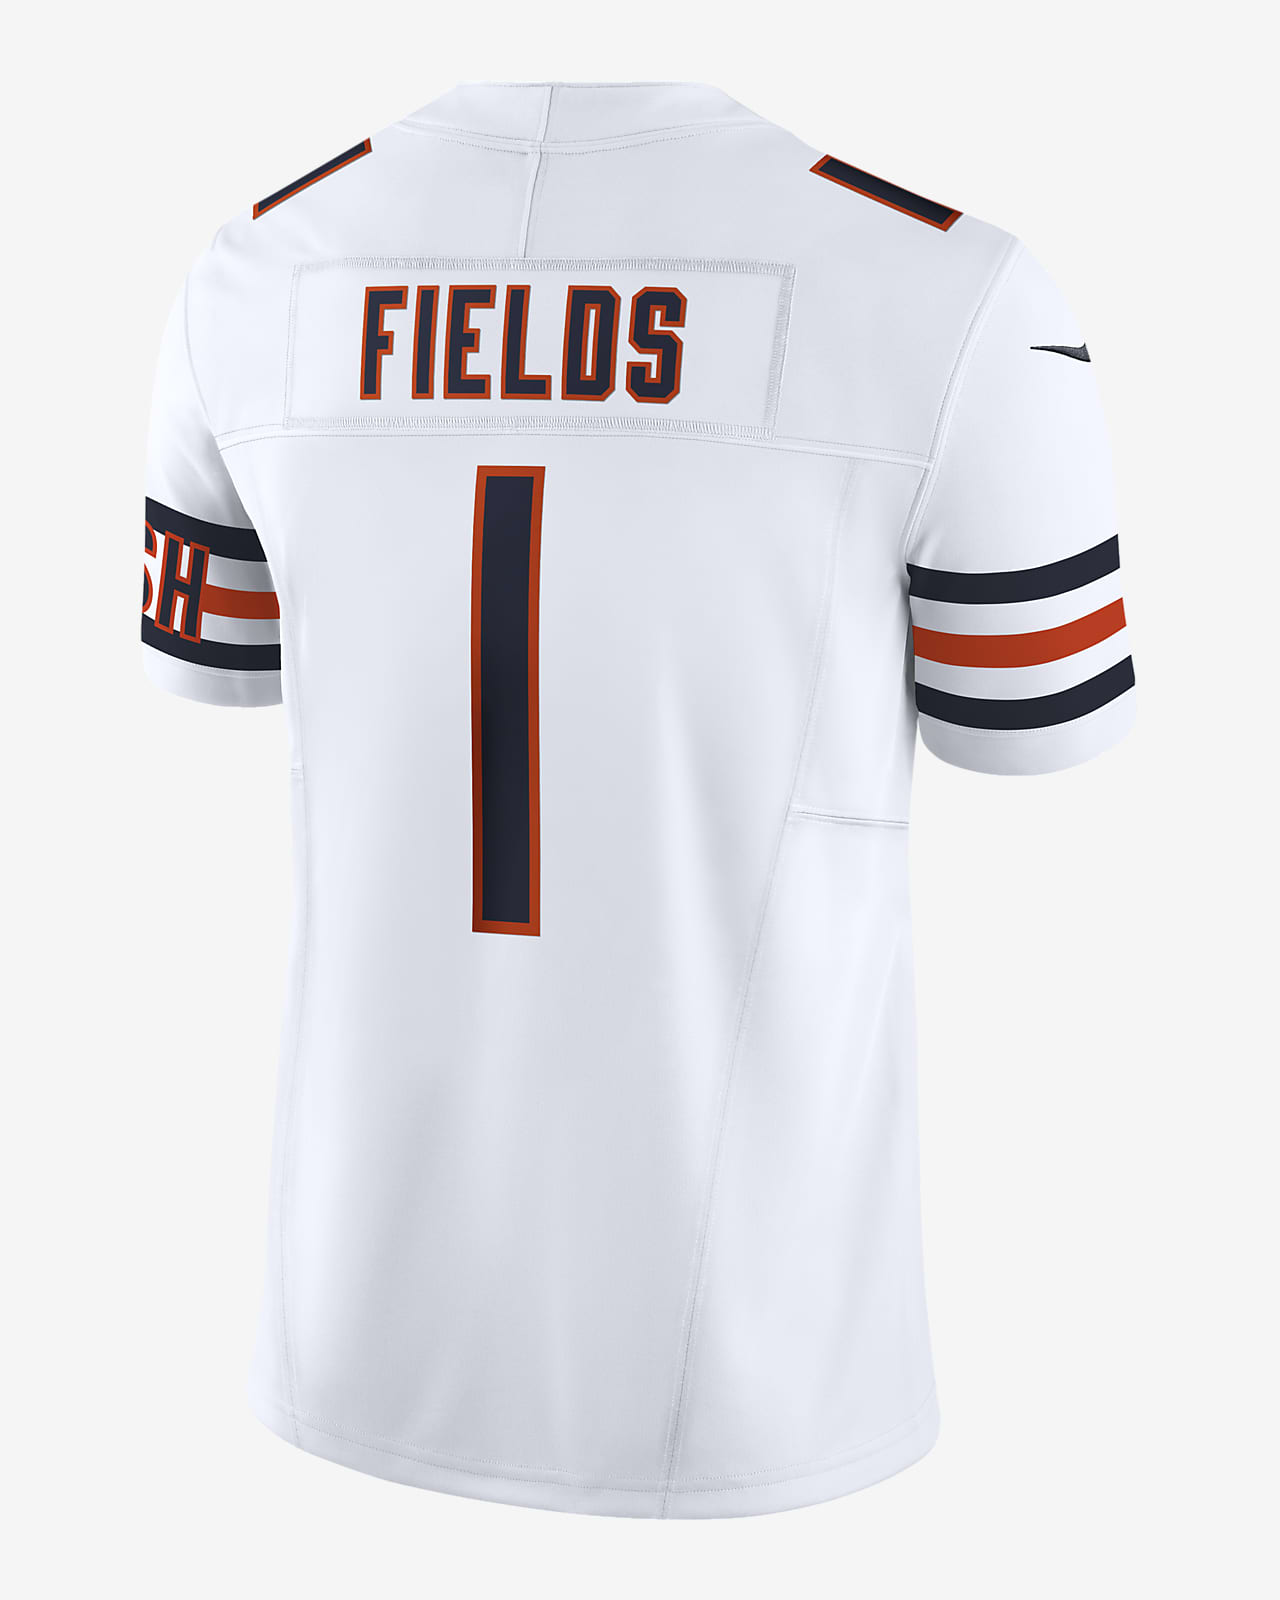 Men's Nike Justin Fields White Chicago Bears Vapor F.U.S.E. Limited Jersey Size: Small